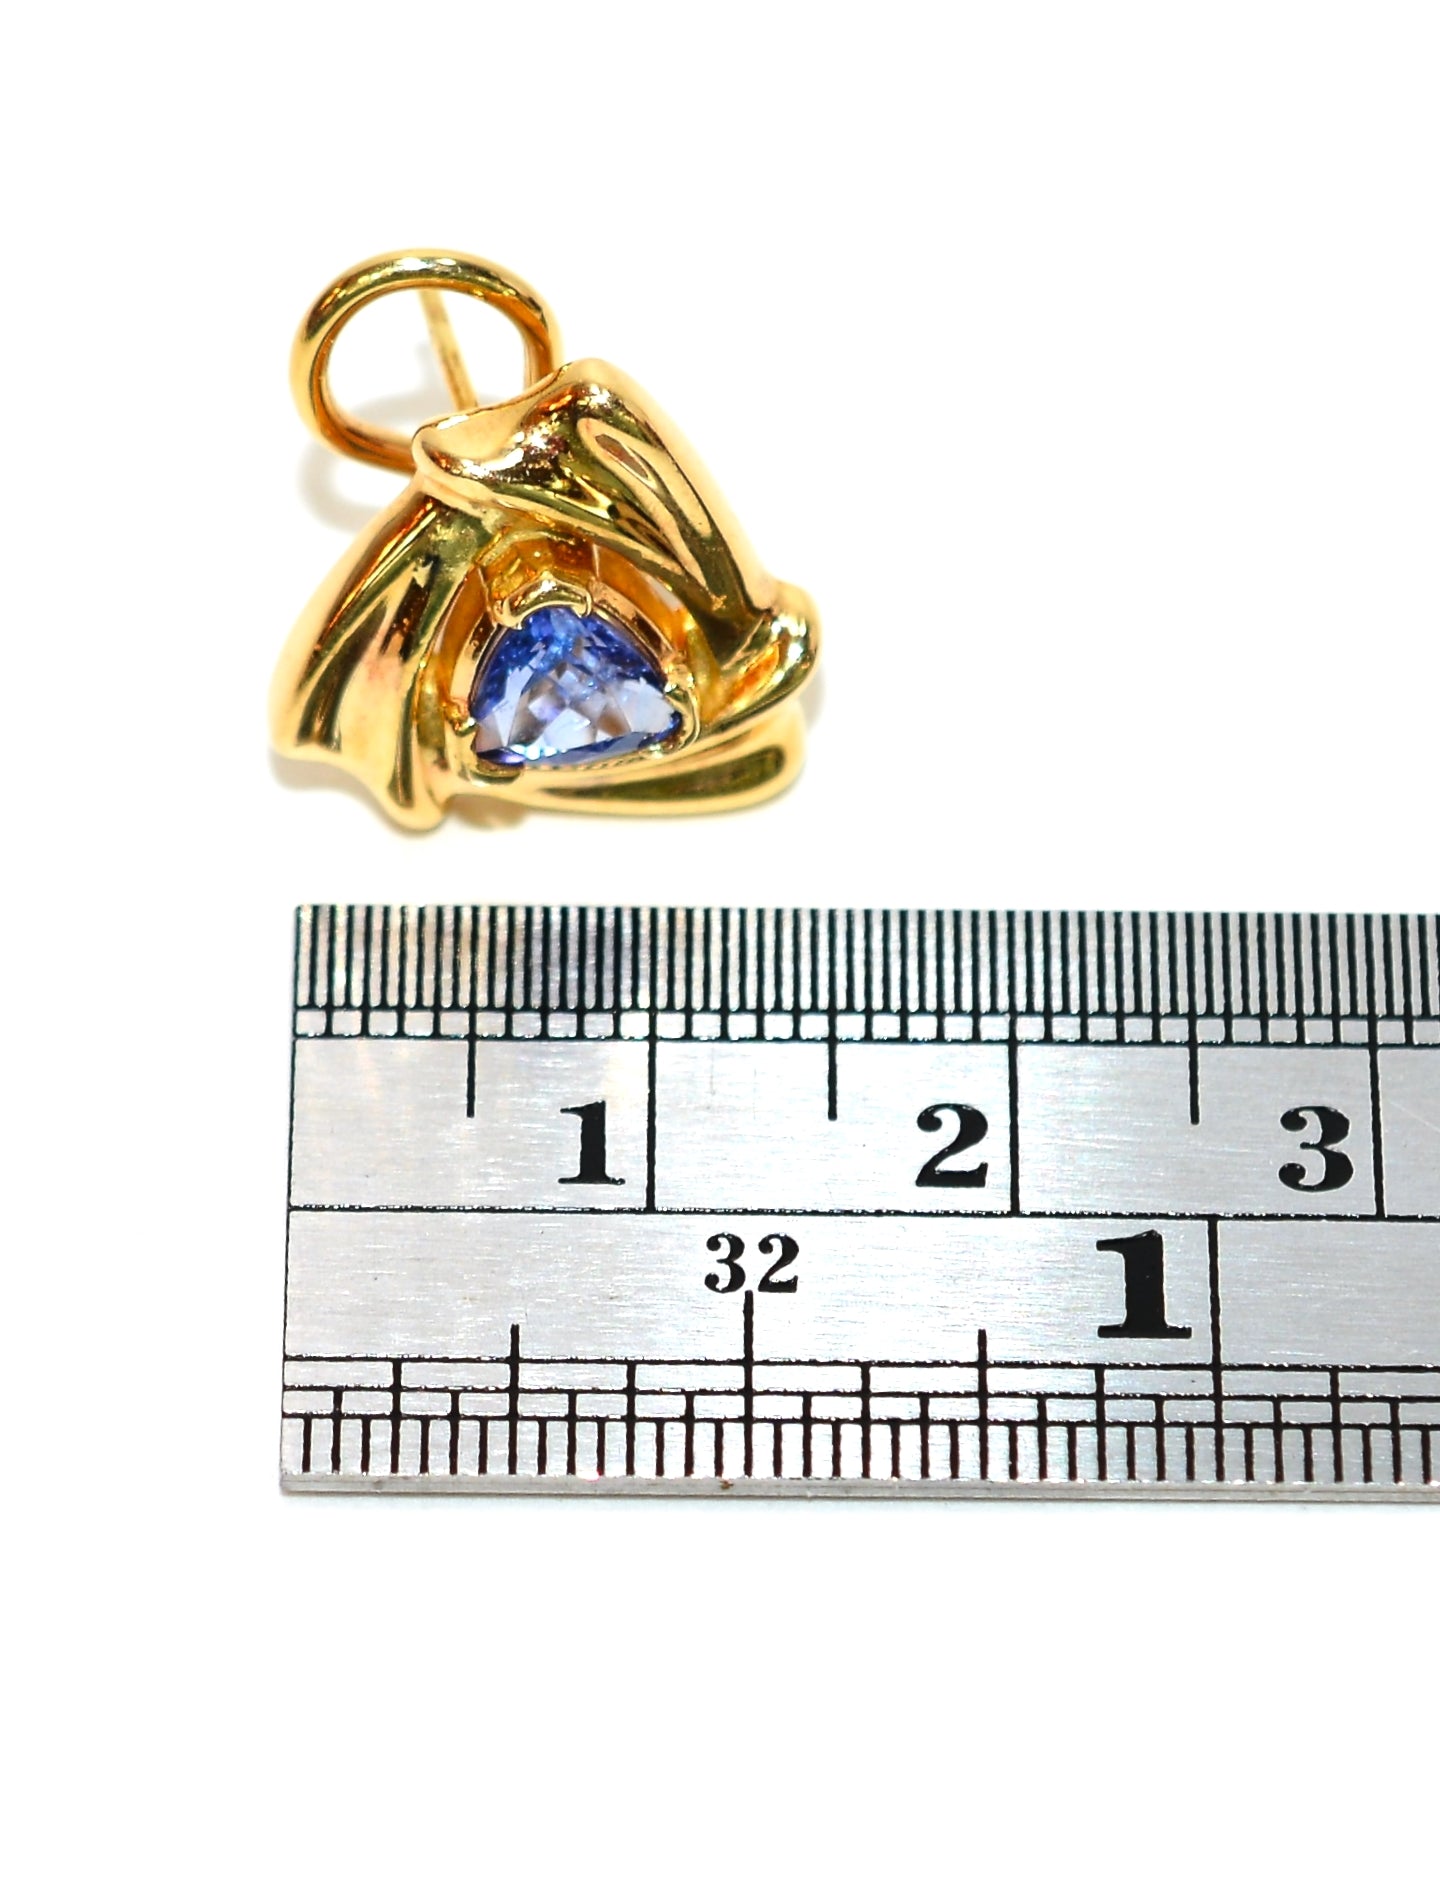 Natural D'Block Tanzanite Earrings 14K Solid Gold 1.44tcw Gemstone Earrings Statement Earrings Cocktail Earrings Birthstone Earrings Purple